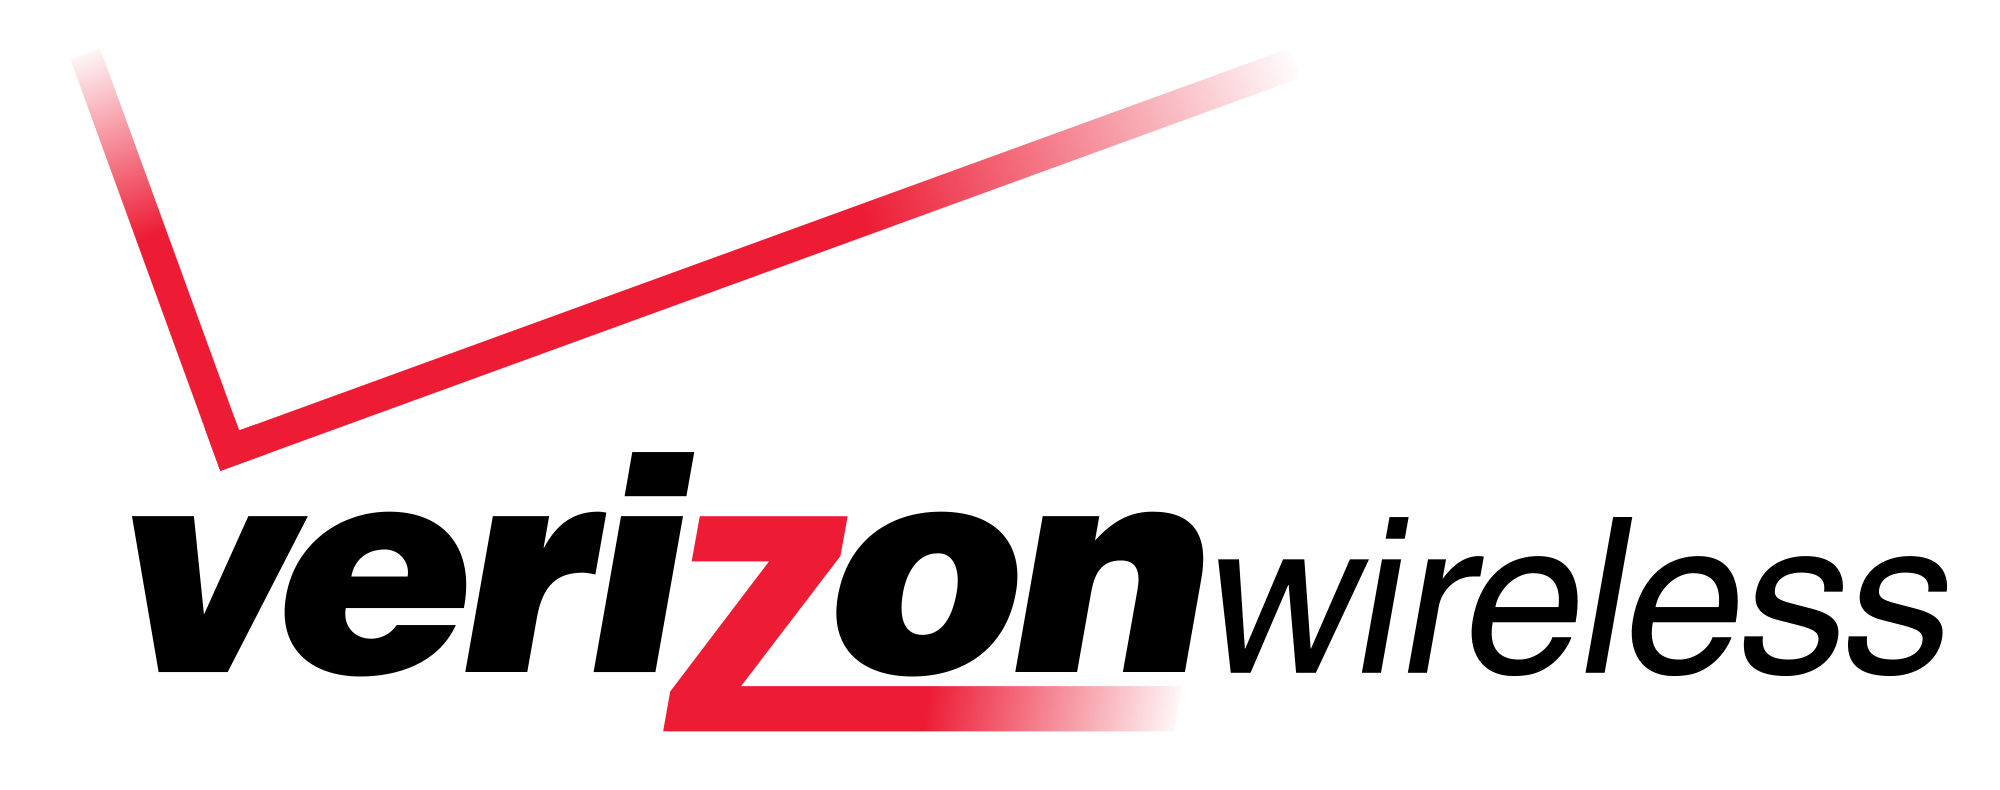 verizon_2015_logo_evolution.png